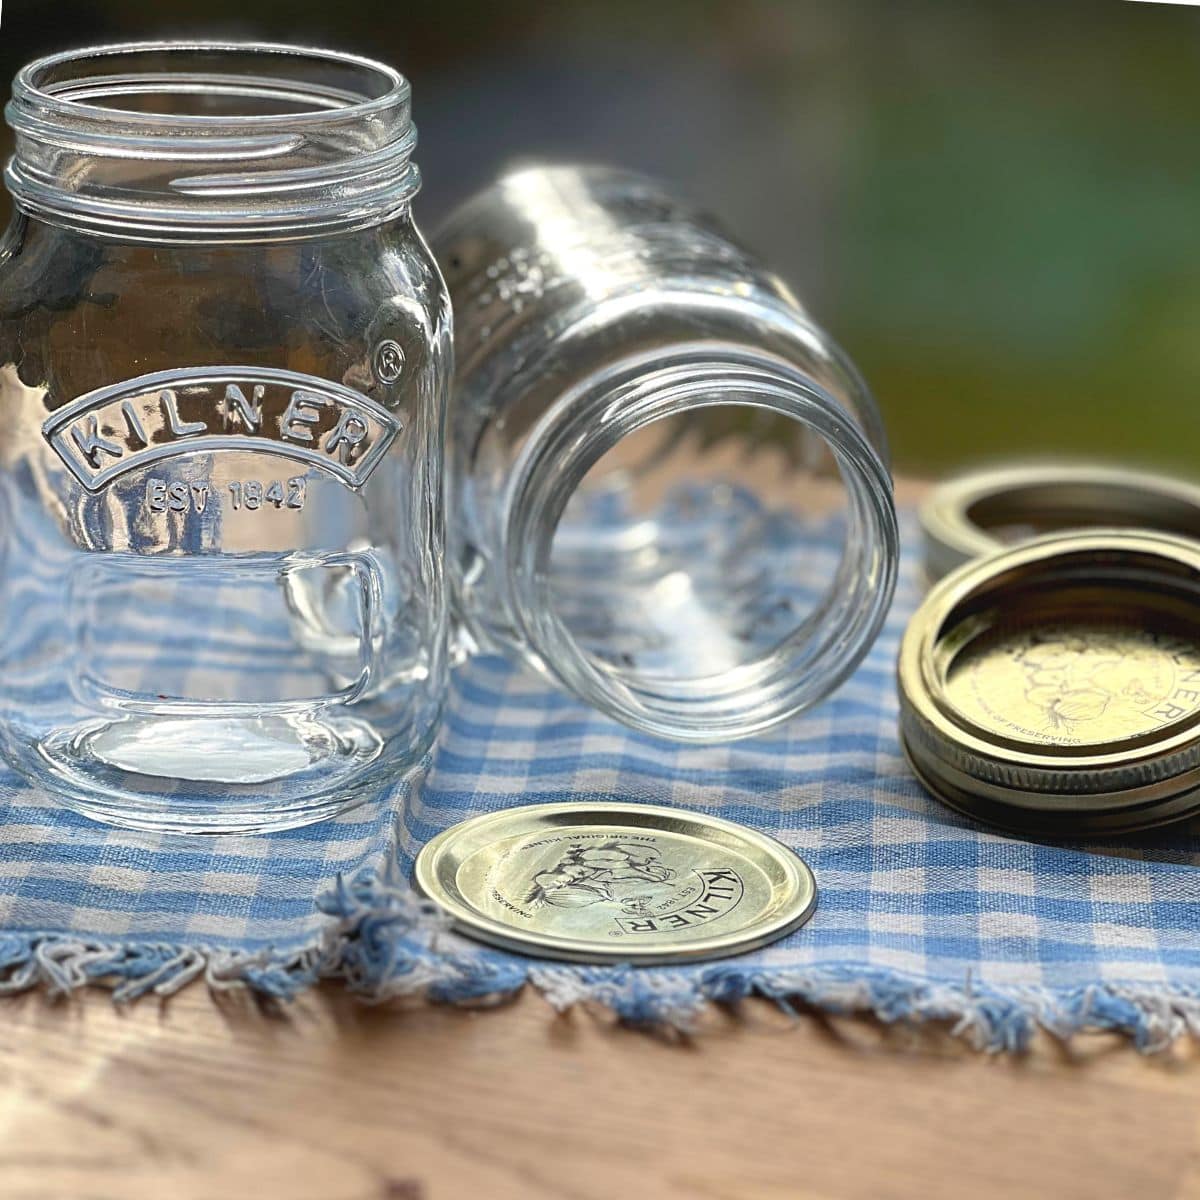 Empty Kilner glass jars next to their lids on a cloth.